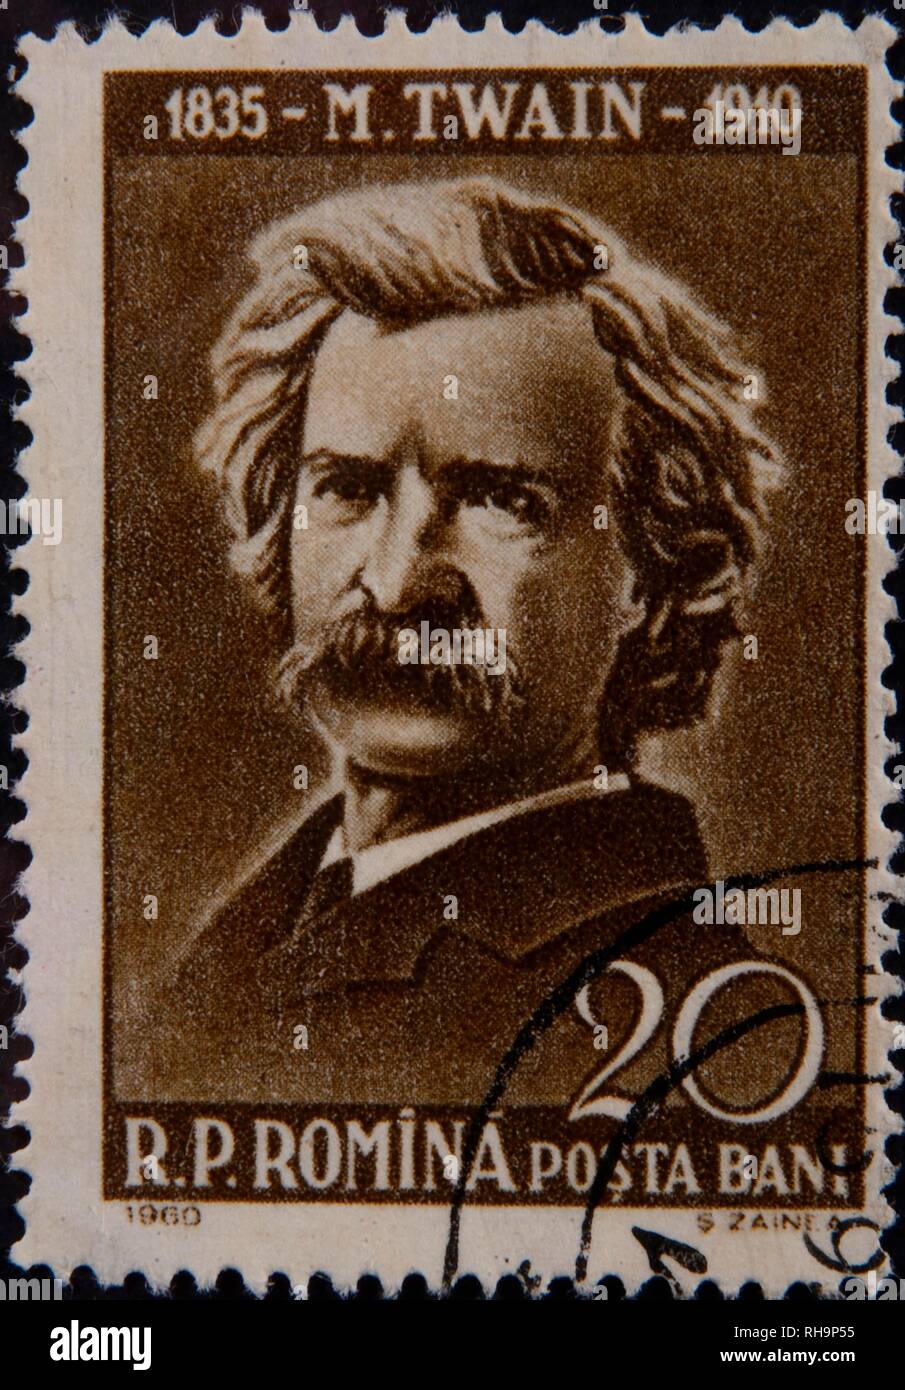 Mark Twain or Samuel Langhorne Clemens, an American writer, portrait on a Romanian stamp, Romania Stock Photo